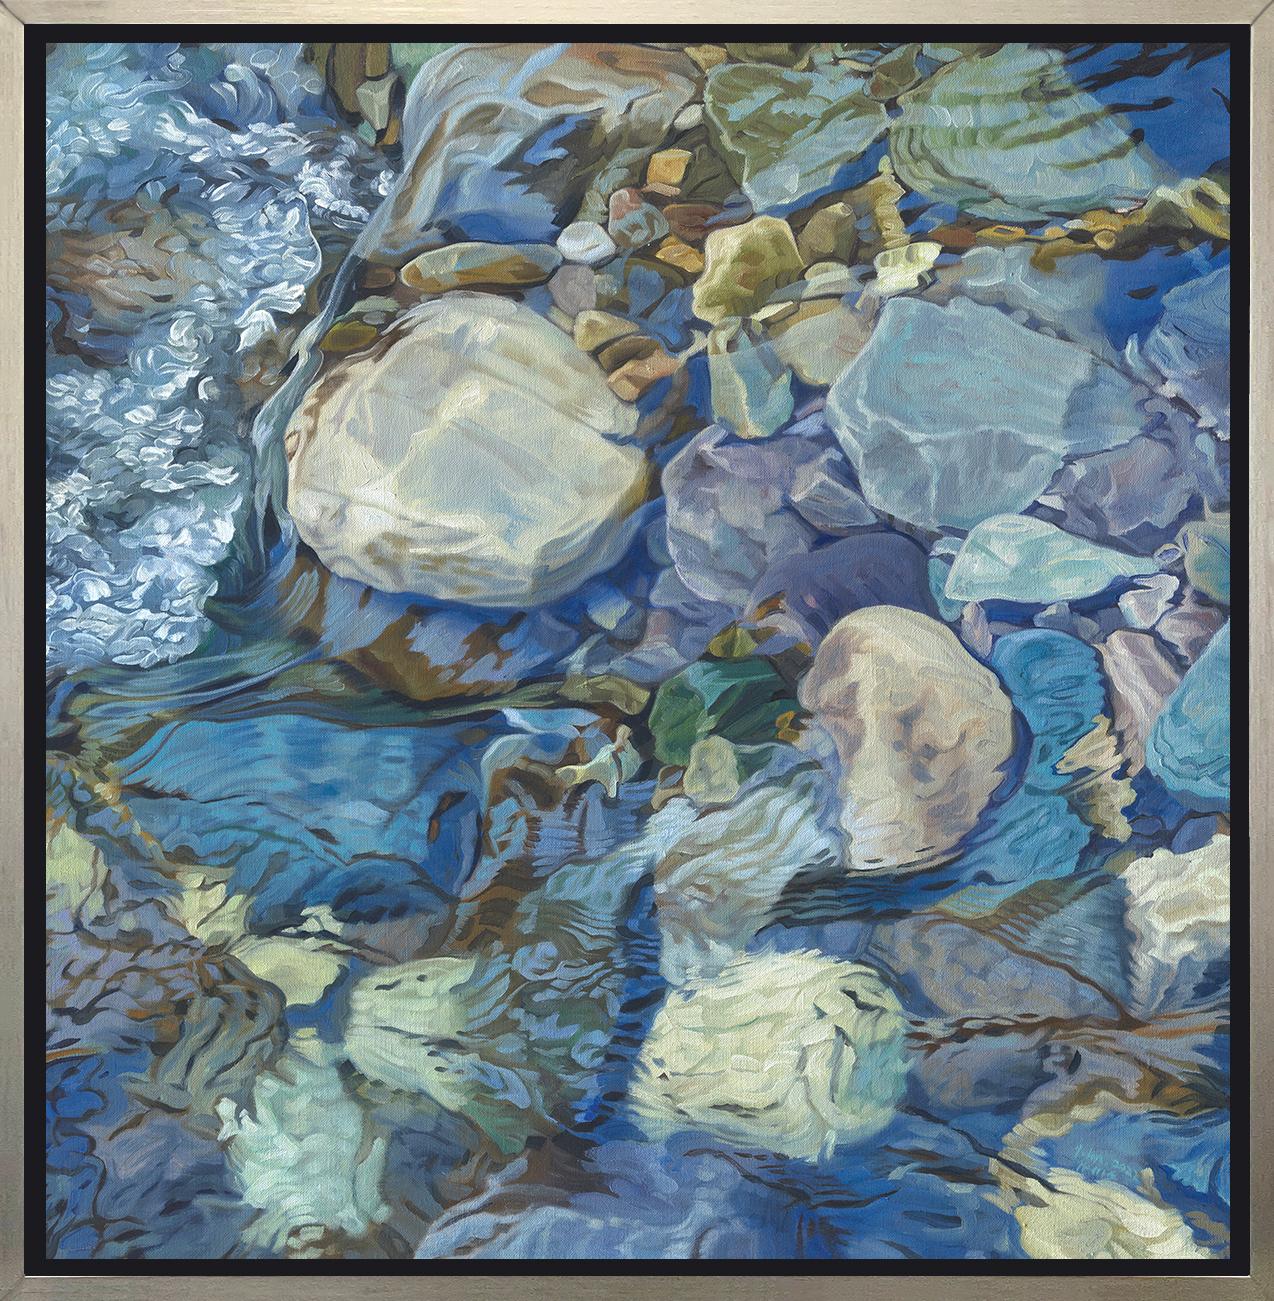 John Harris (painter) Landscape Print - "Rocky River 9, " Framed Limited Edition Giclee Print, 30" x 30"